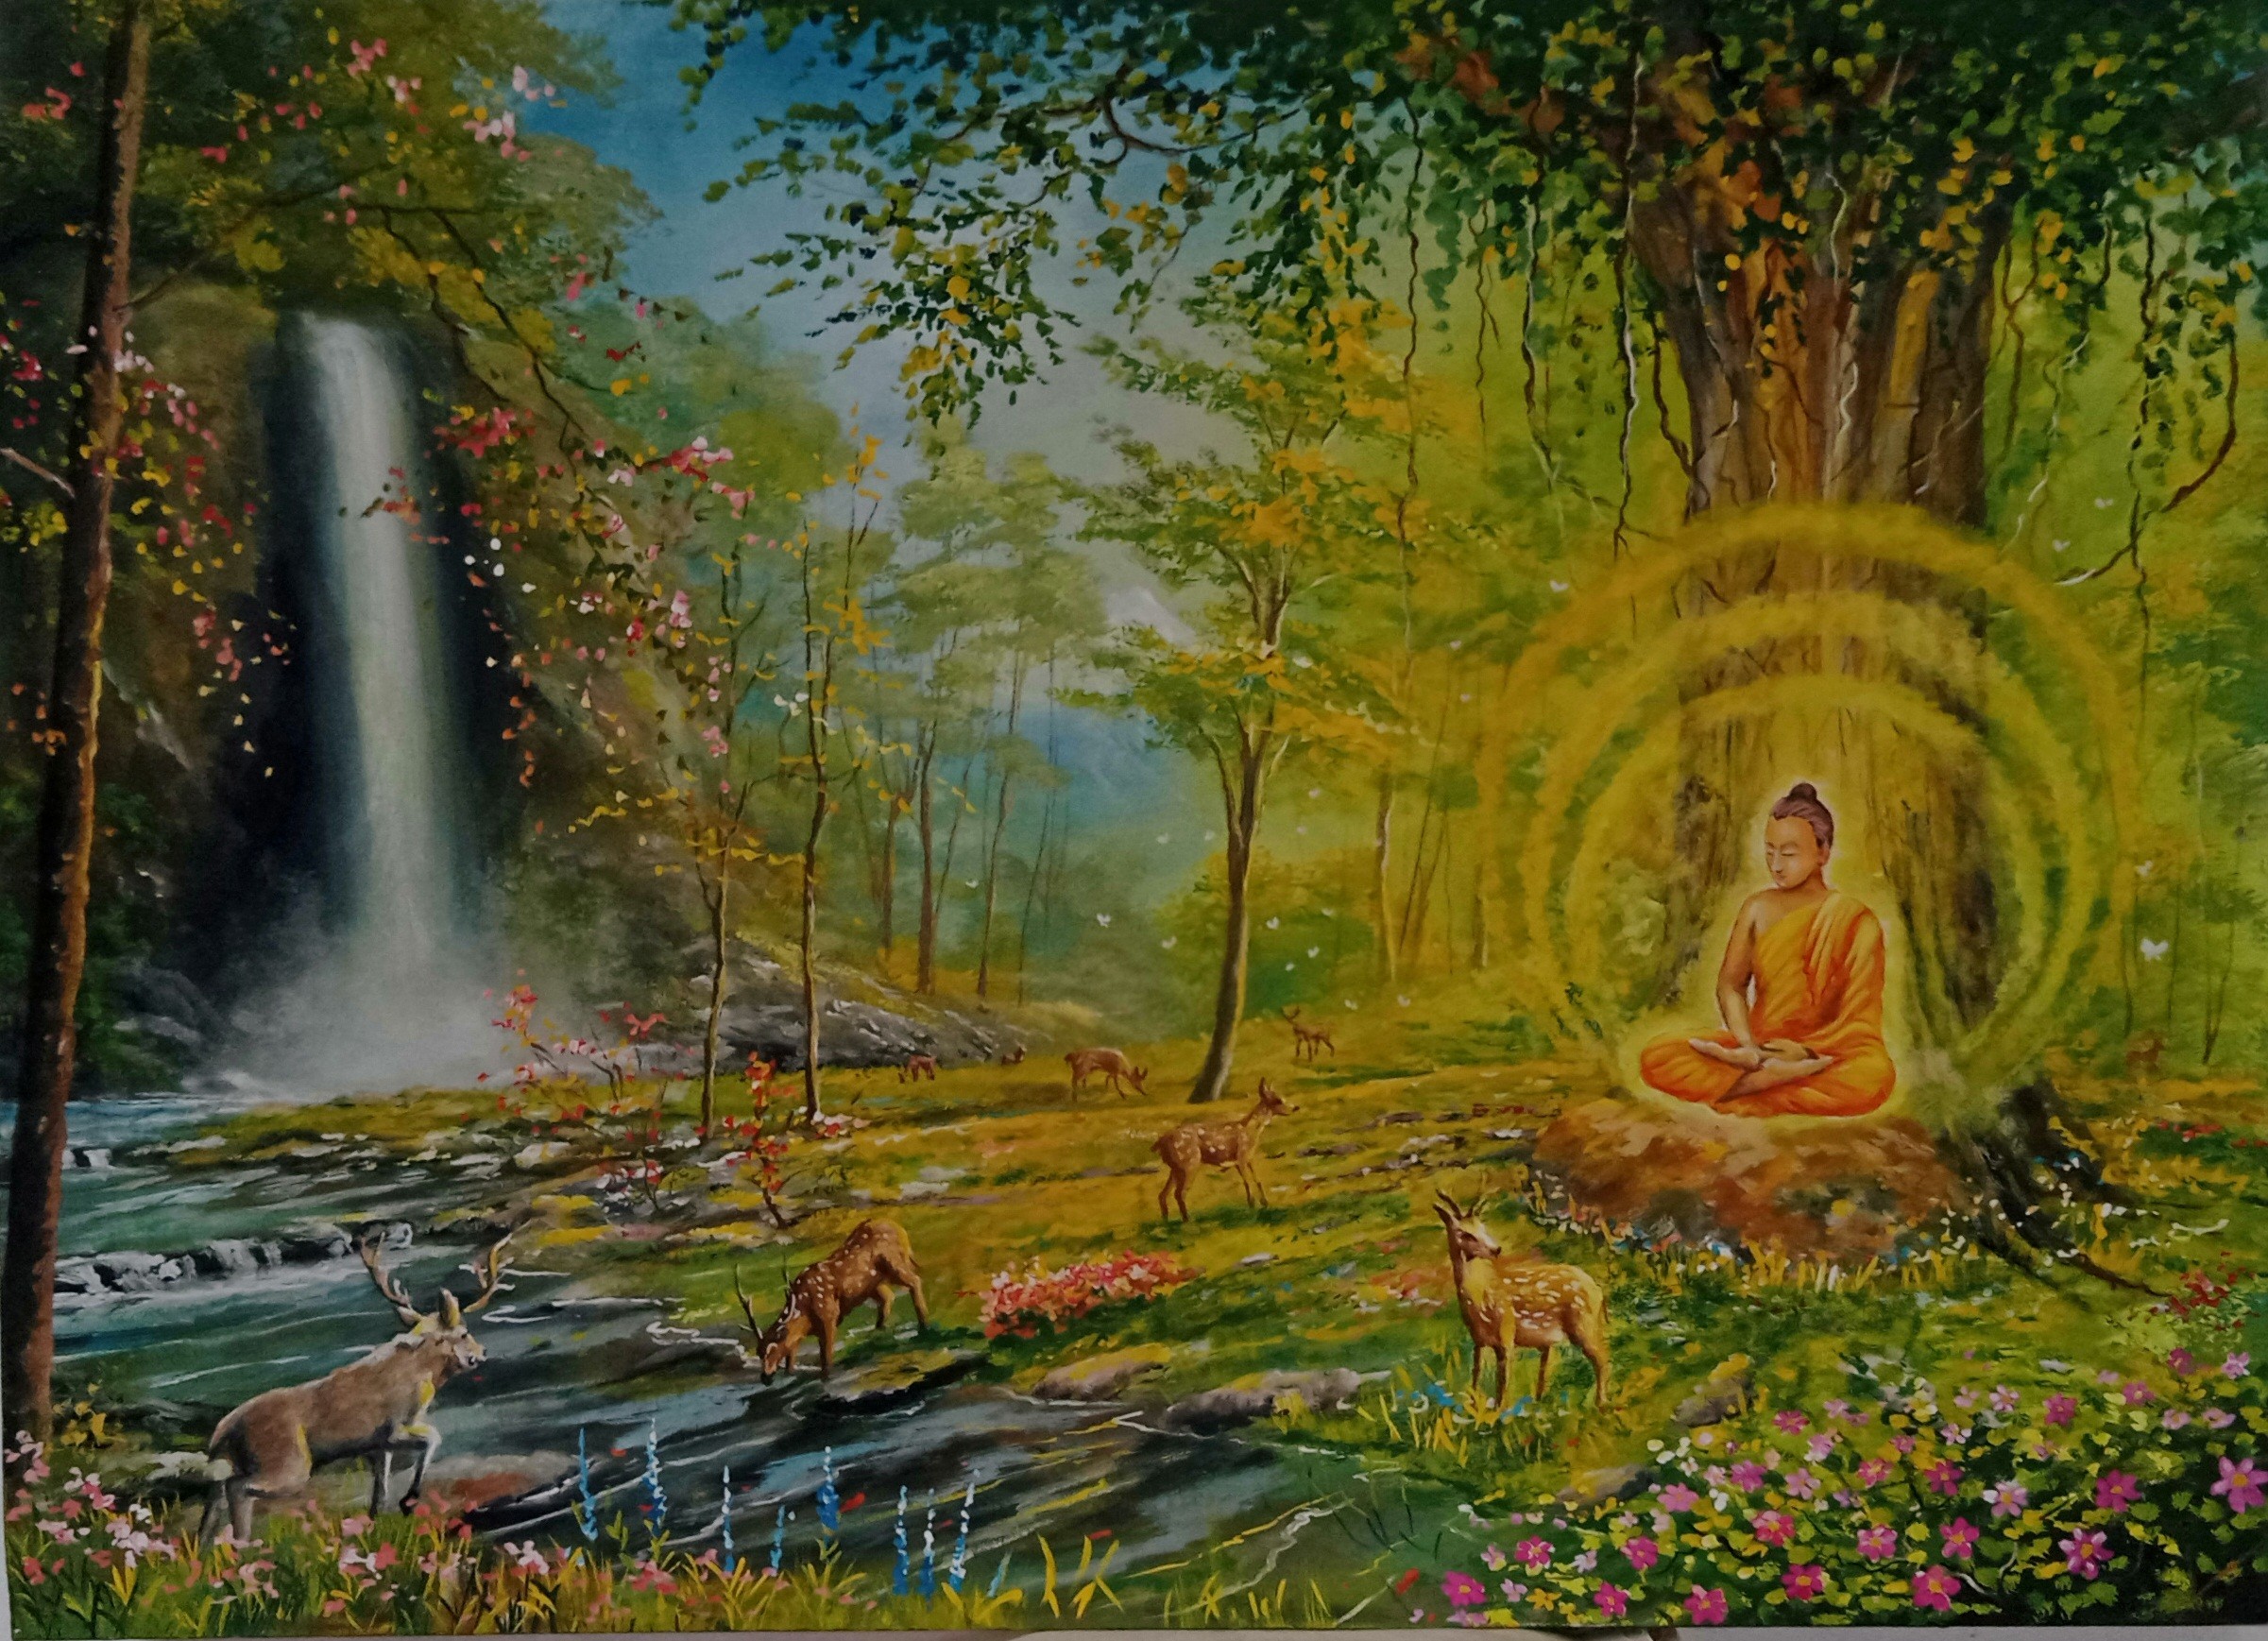 The Lord Buddha with Nature by Madhawa Chandraratne